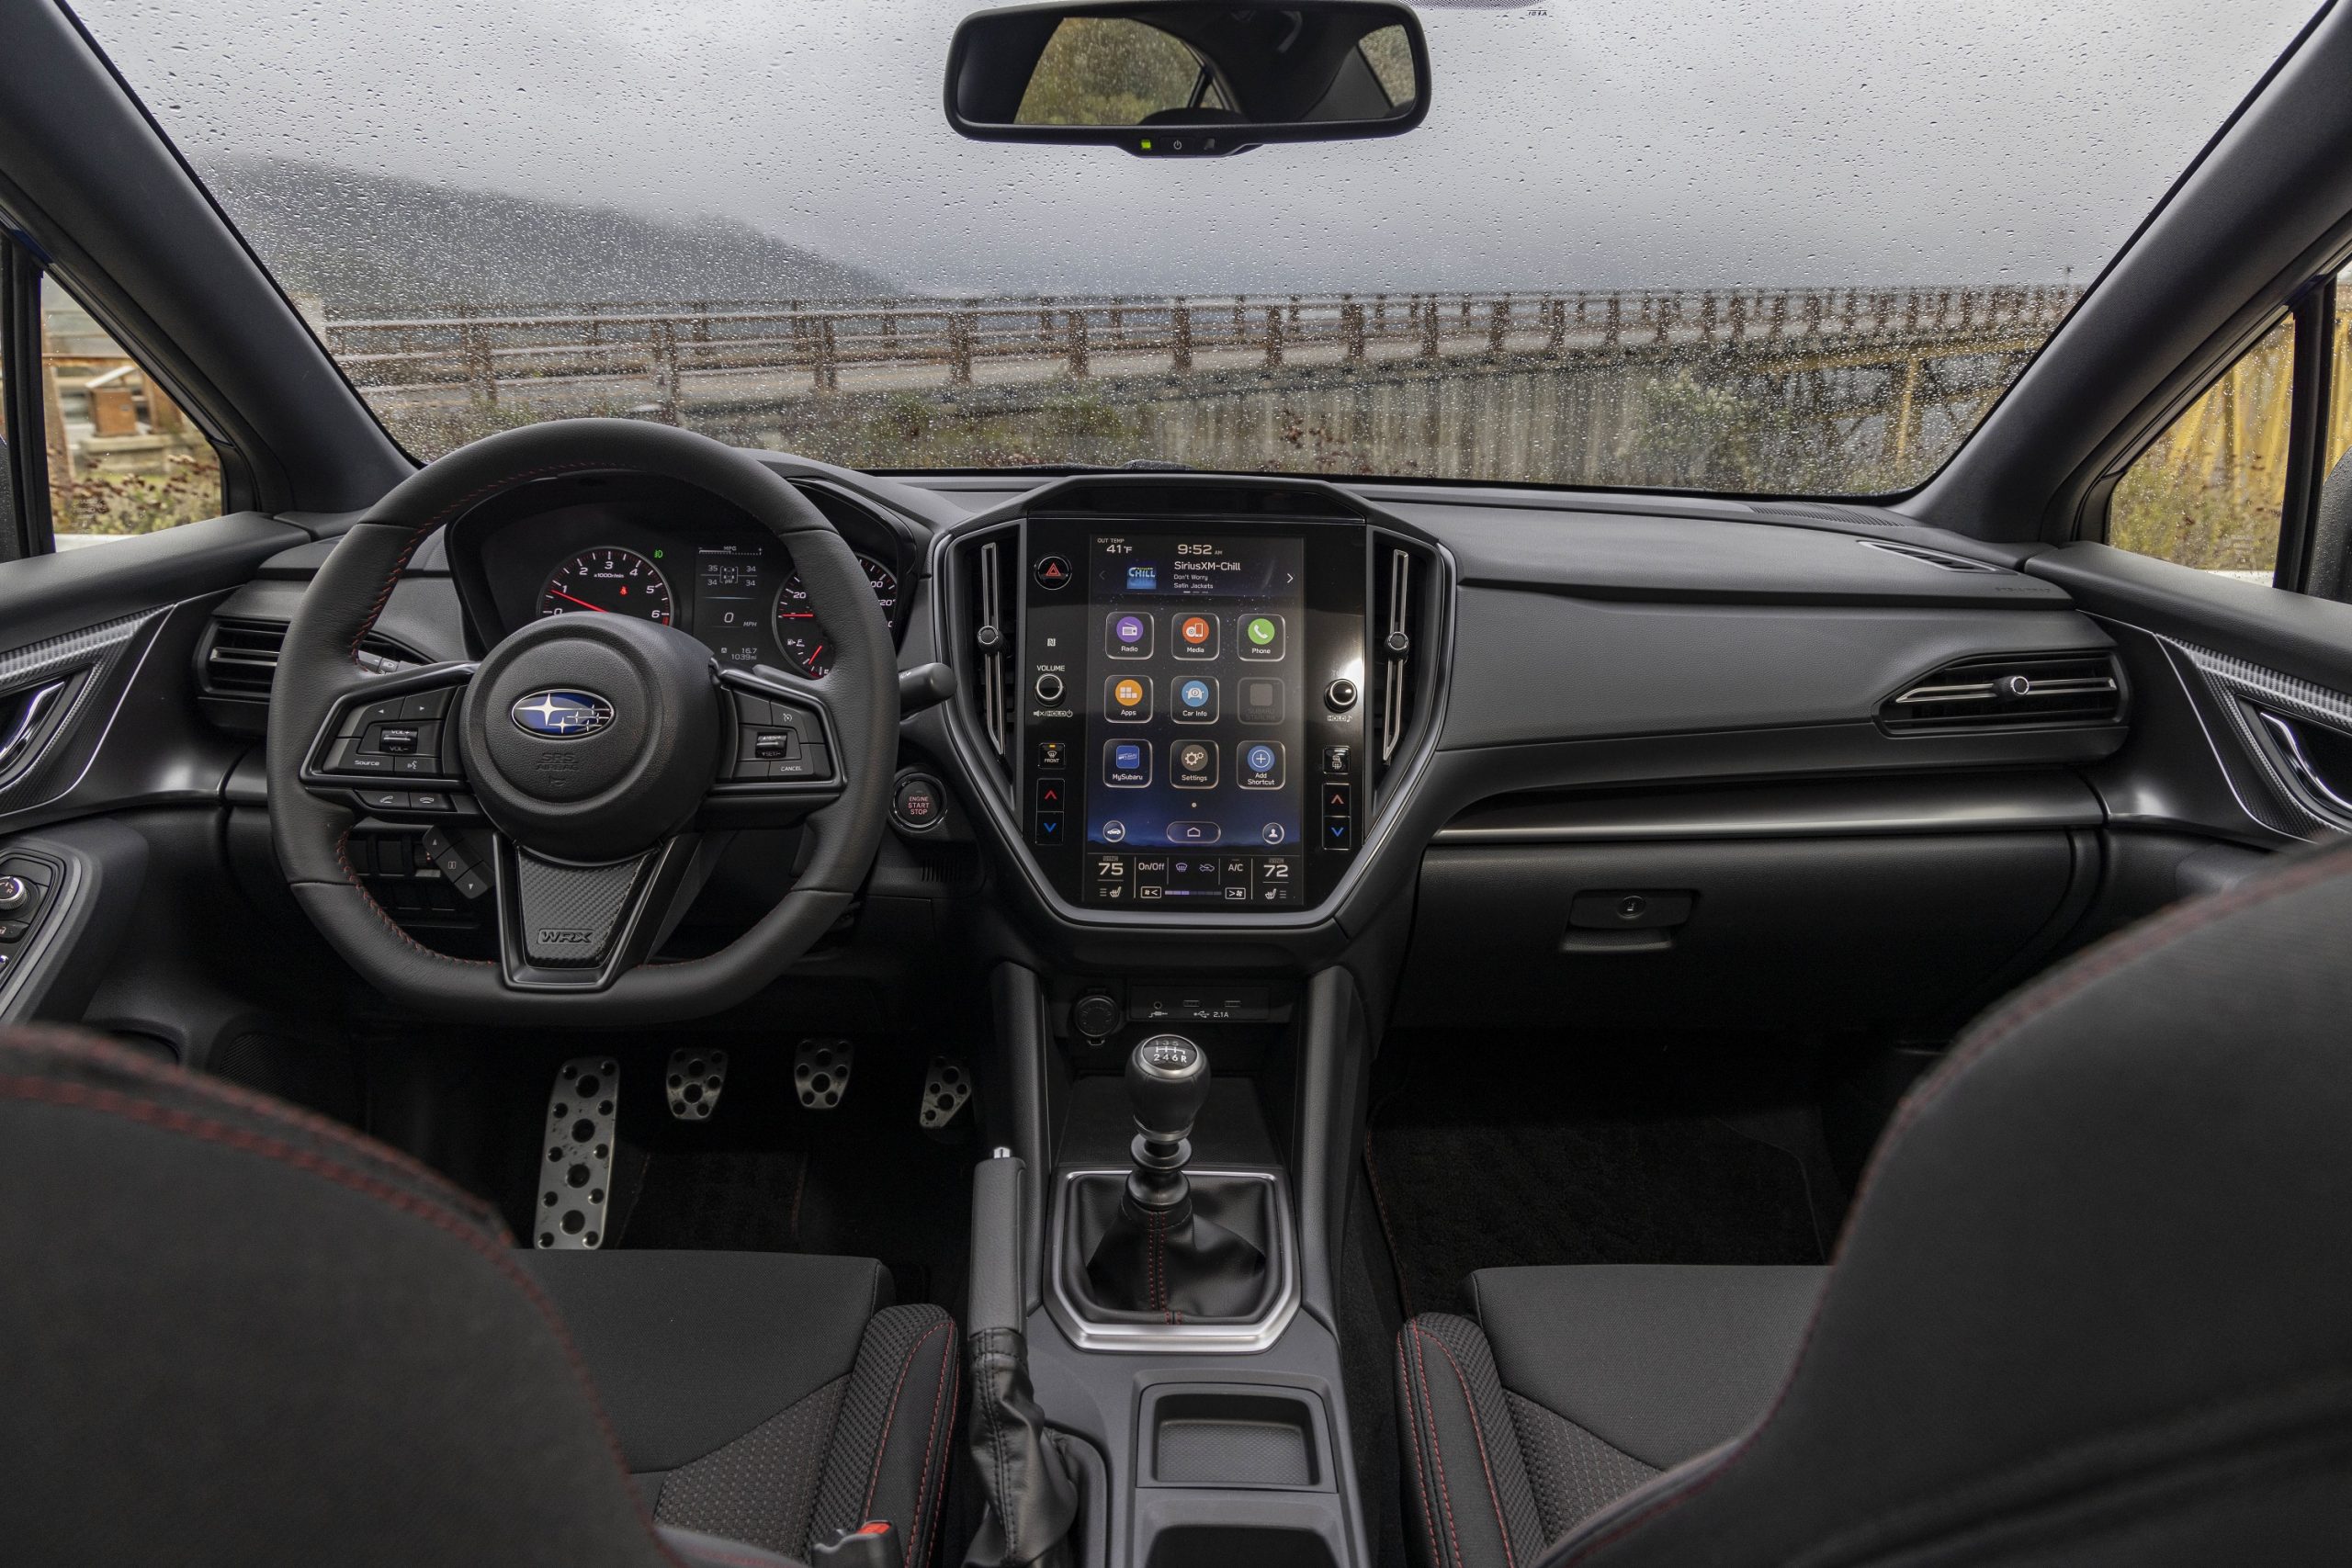 The interior of the new Subaru WRX and 2022 Subaru WRX STI models